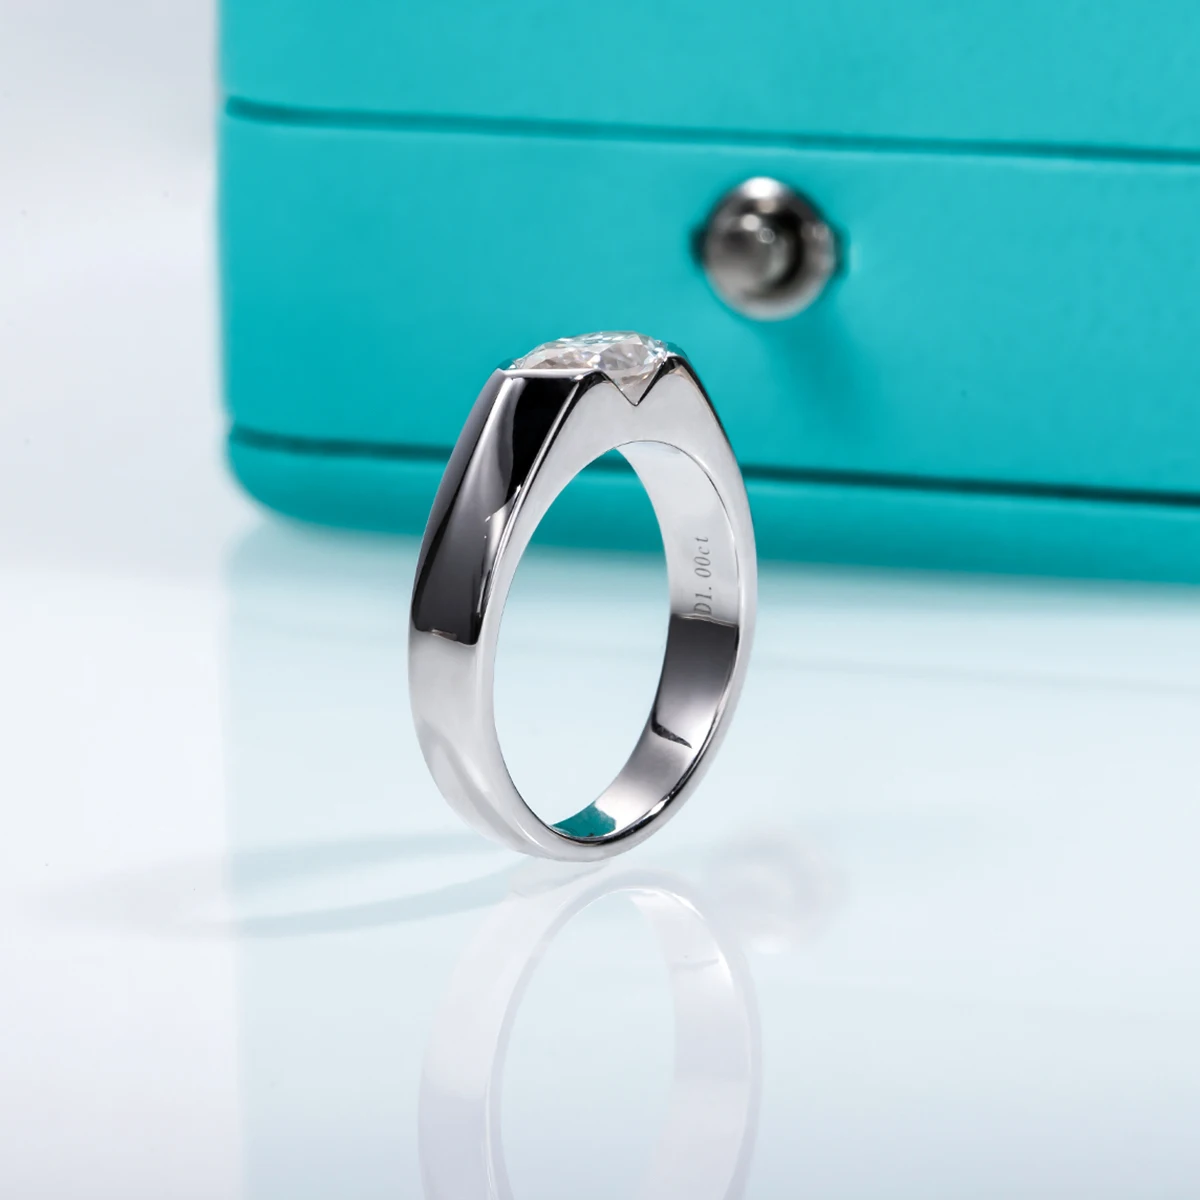 Tiffany & Co releases Diamond Engagement Rings for Men